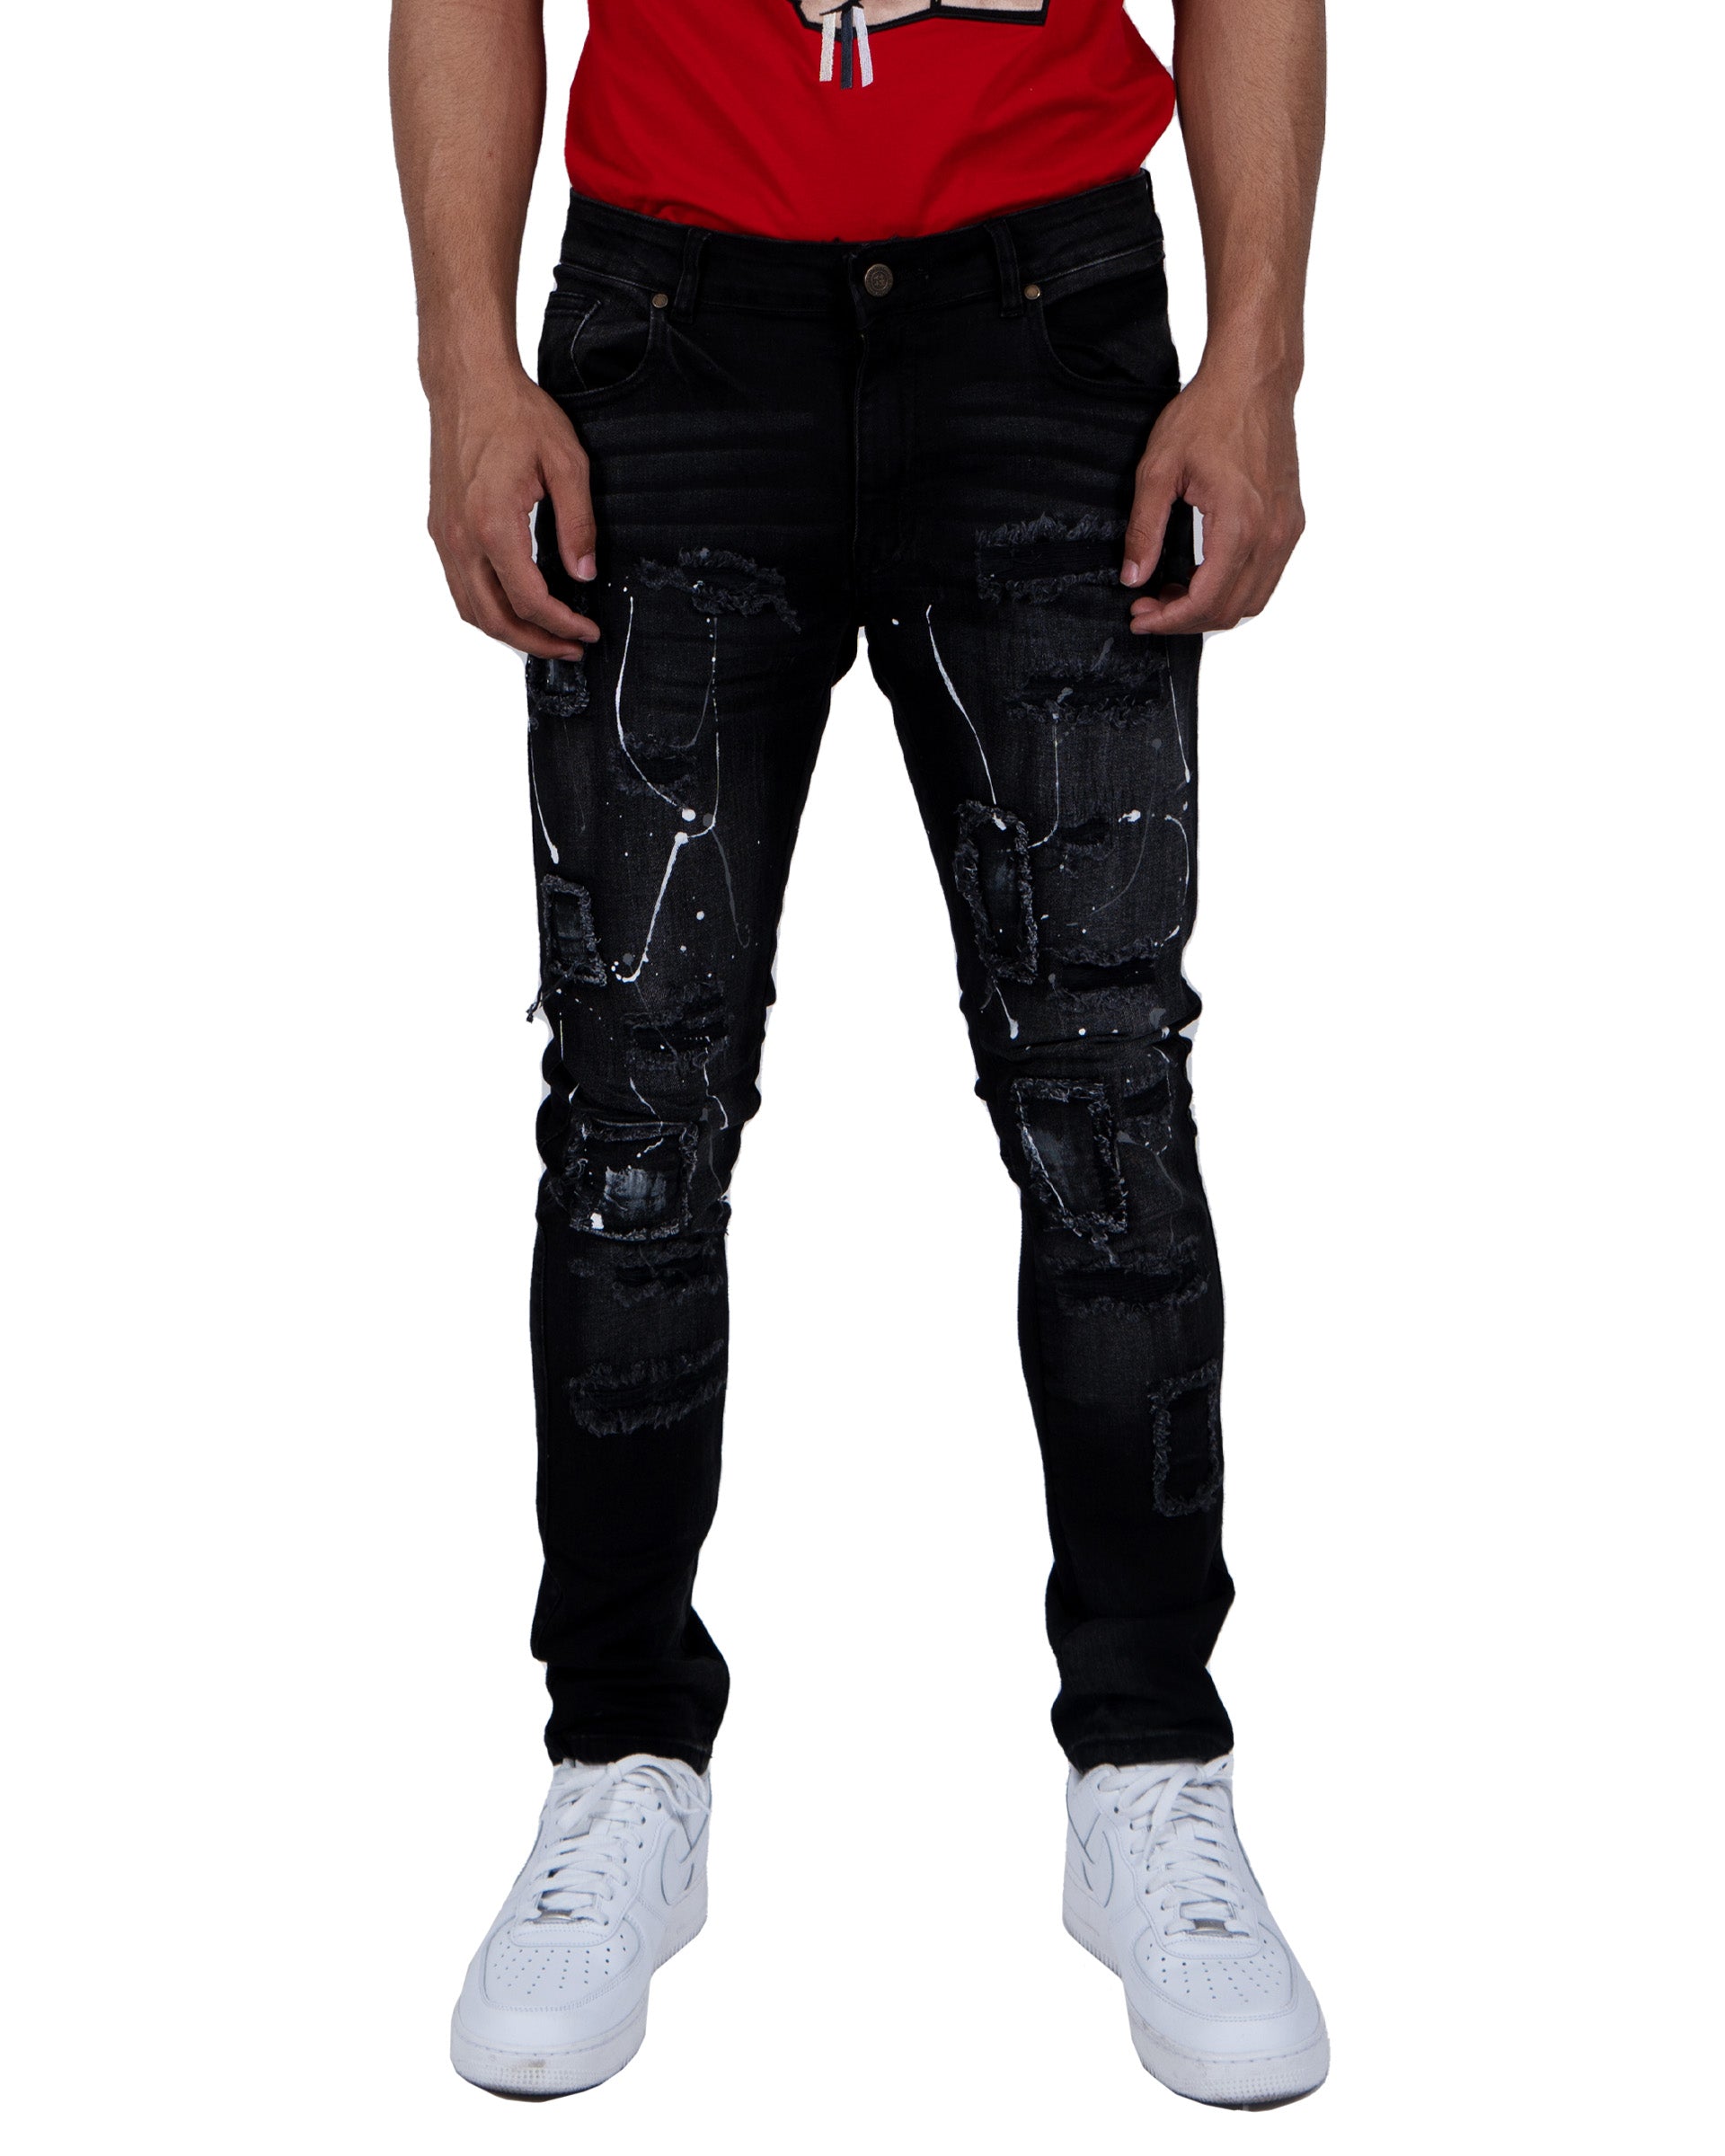 JACKSON | Slim Fit Distressed Denim Jeans in Black Wash